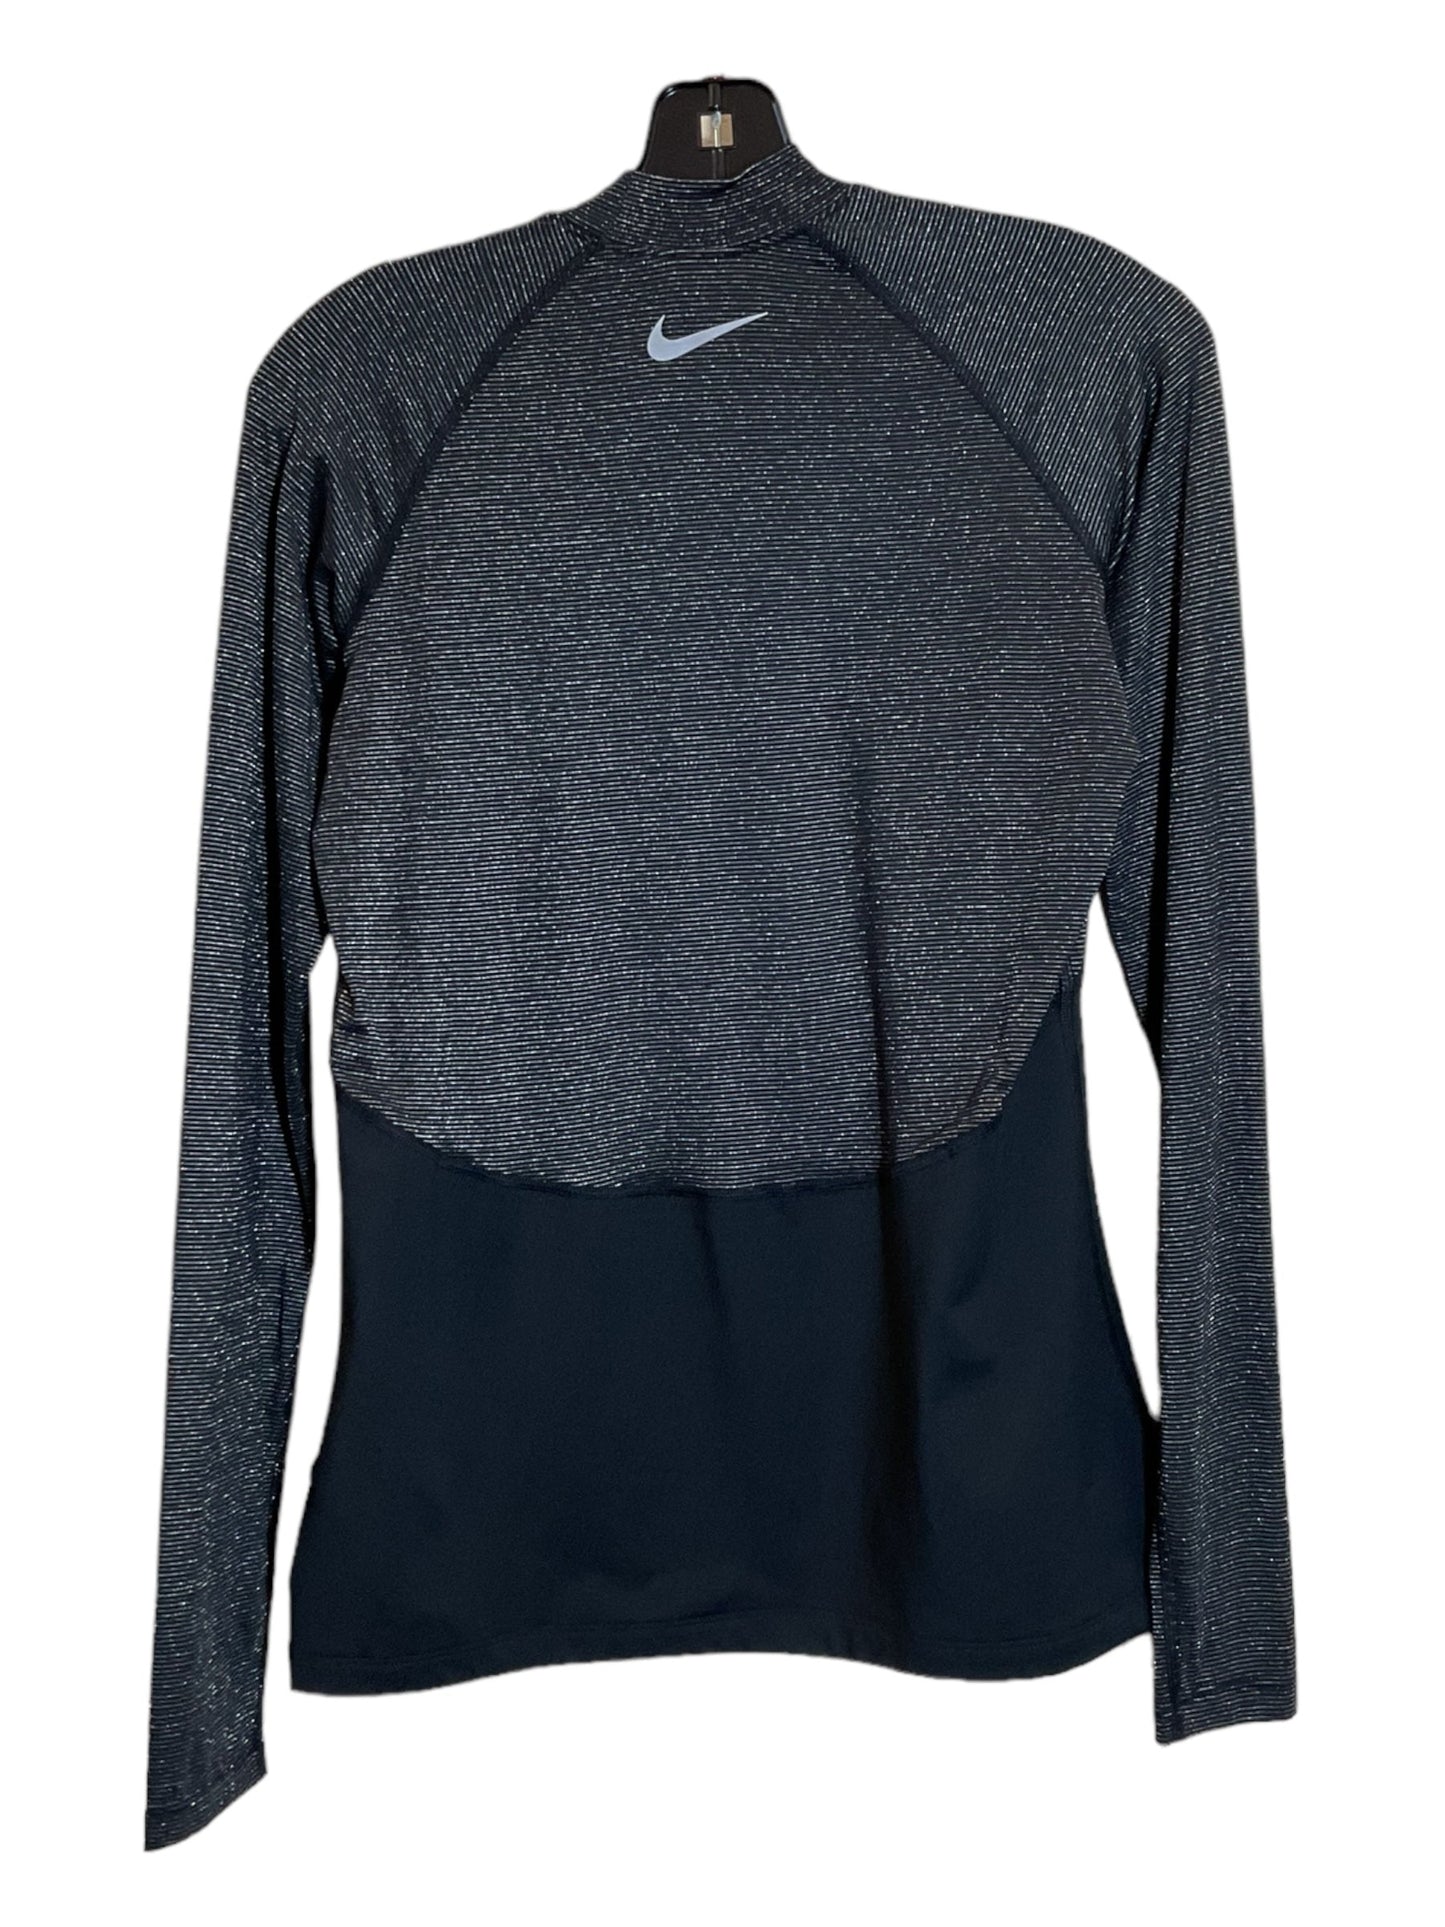 Black Athletic Top Long Sleeve Crewneck Nike, Size M